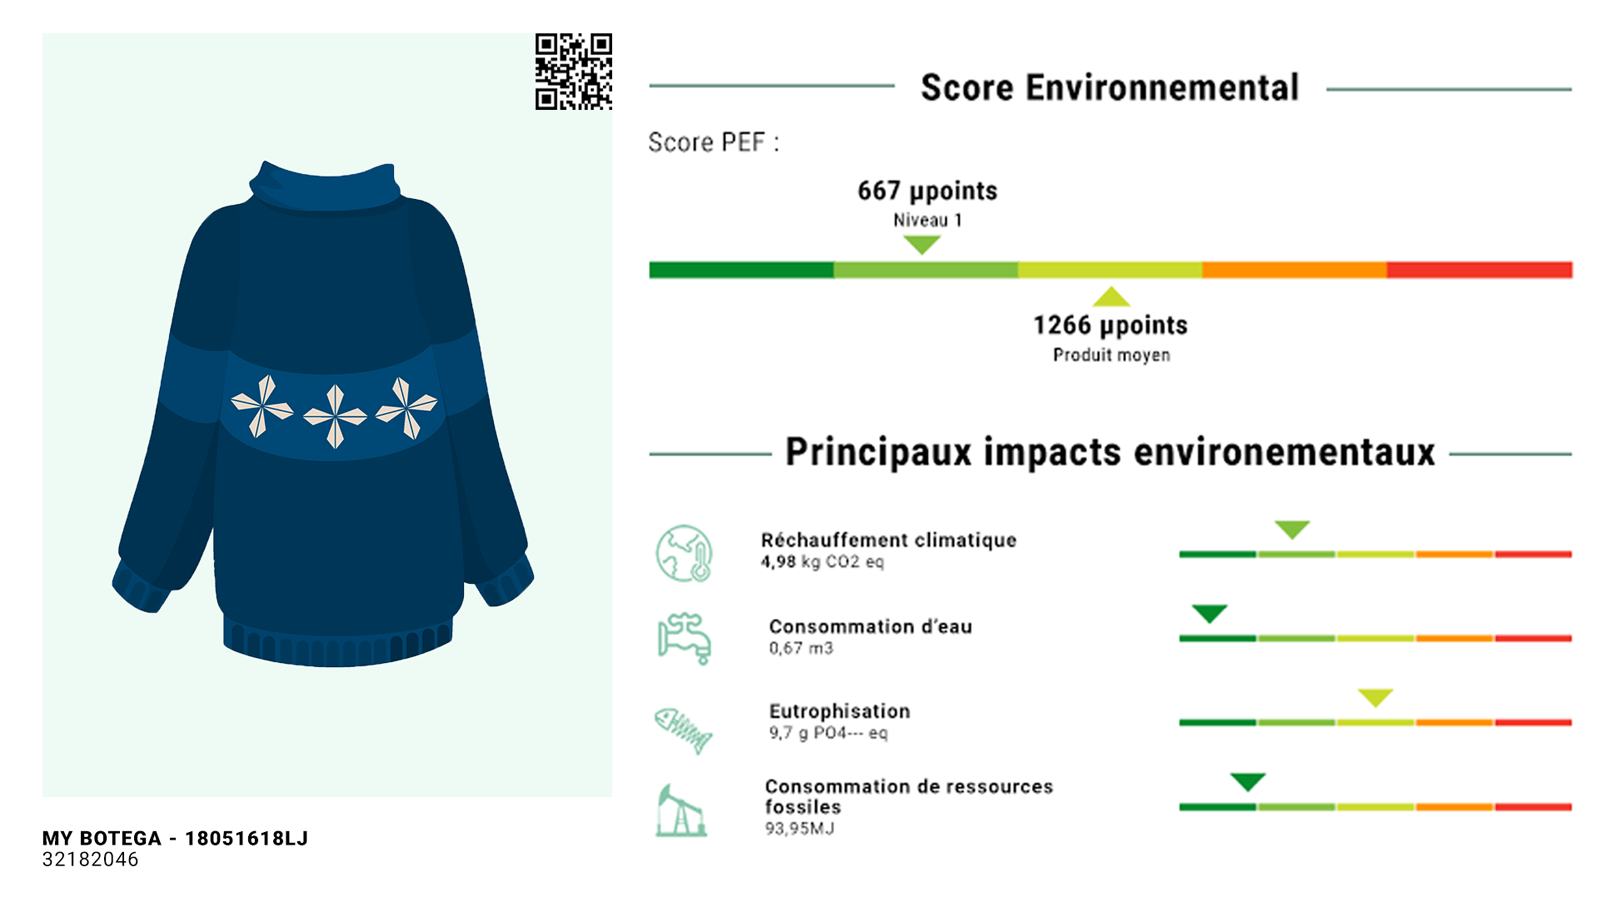 Miljø score